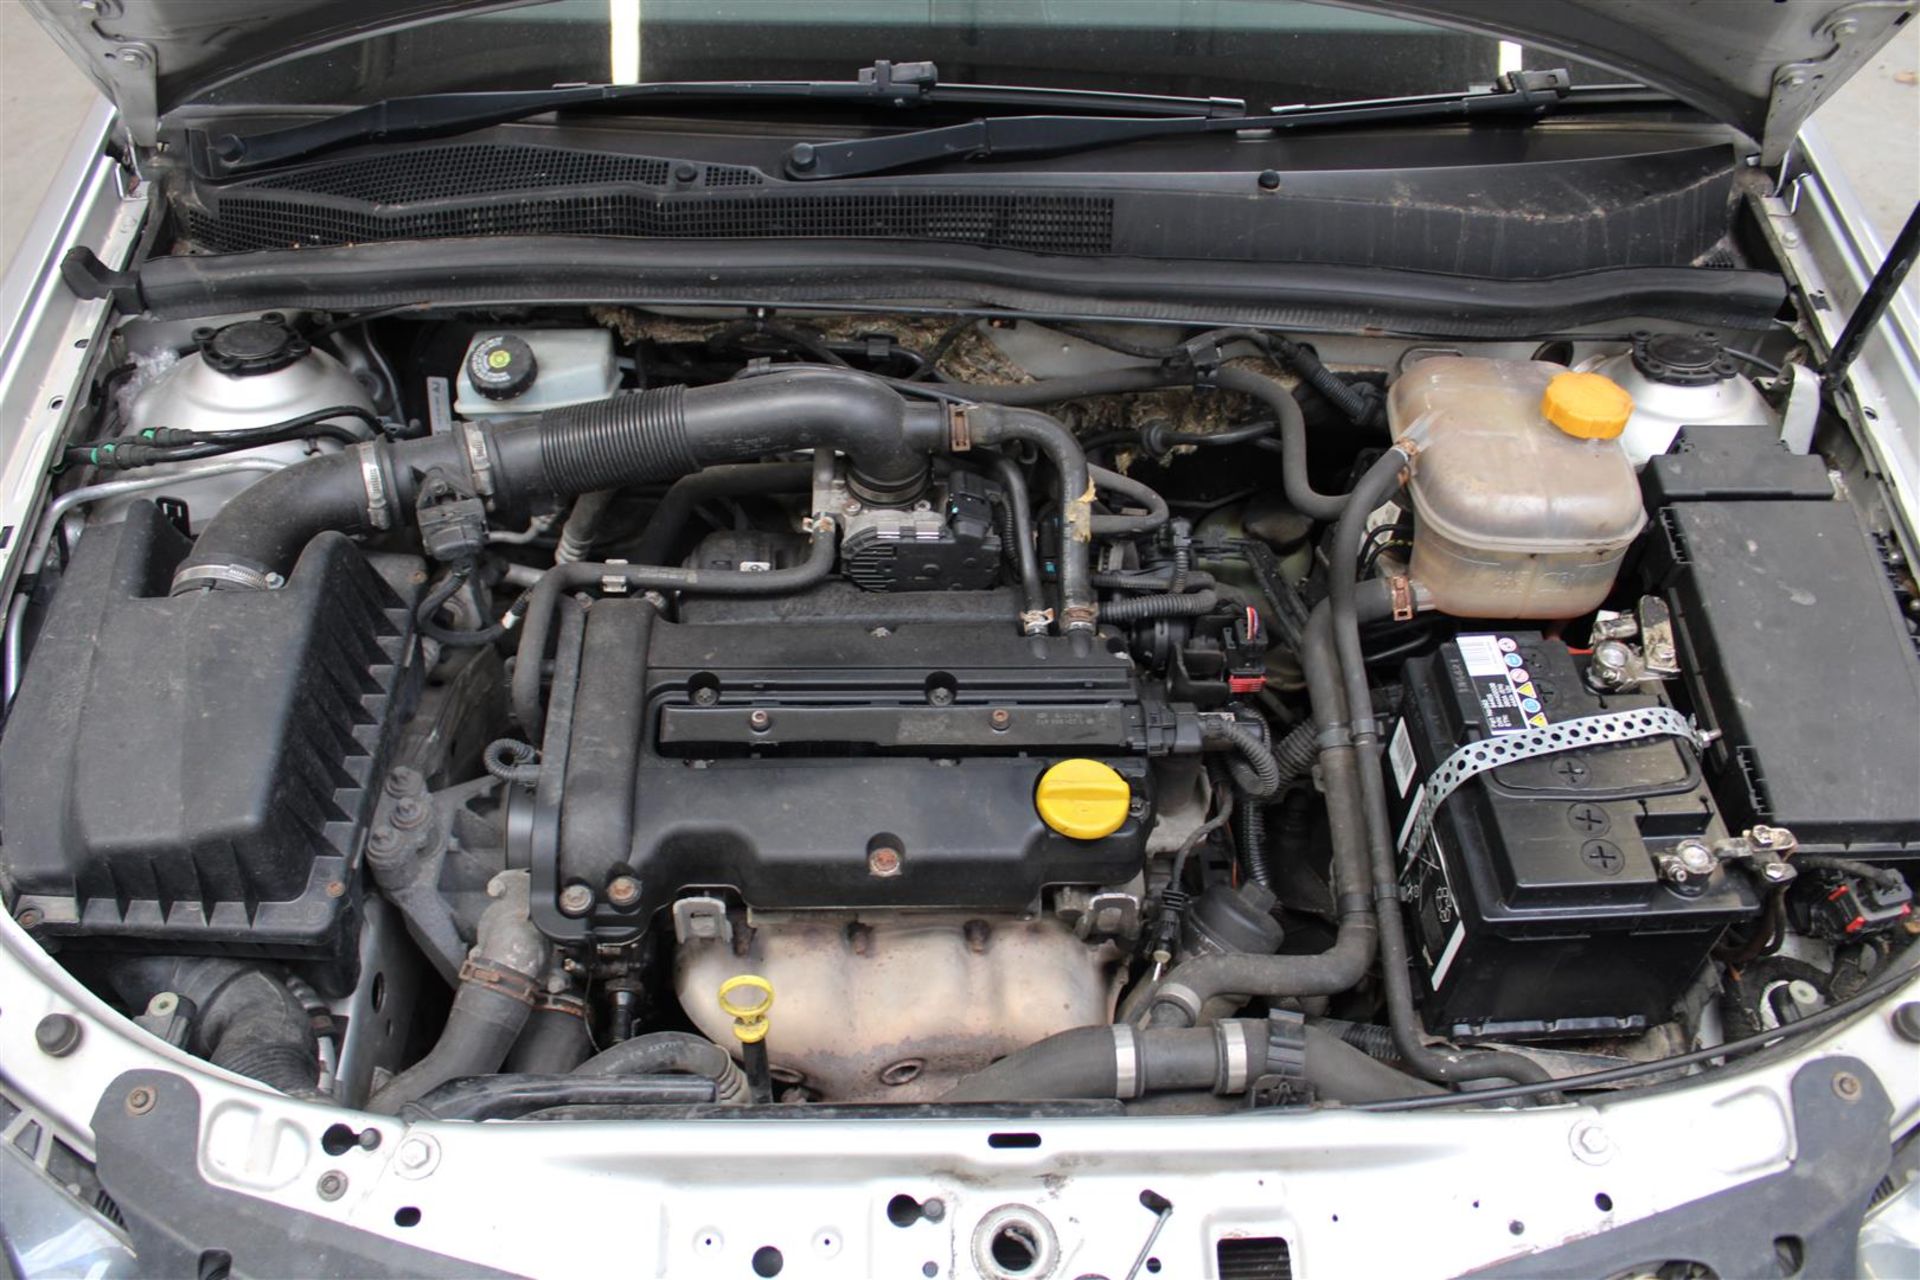 08 08 Vauxhall Astra SXI - Image 4 of 42